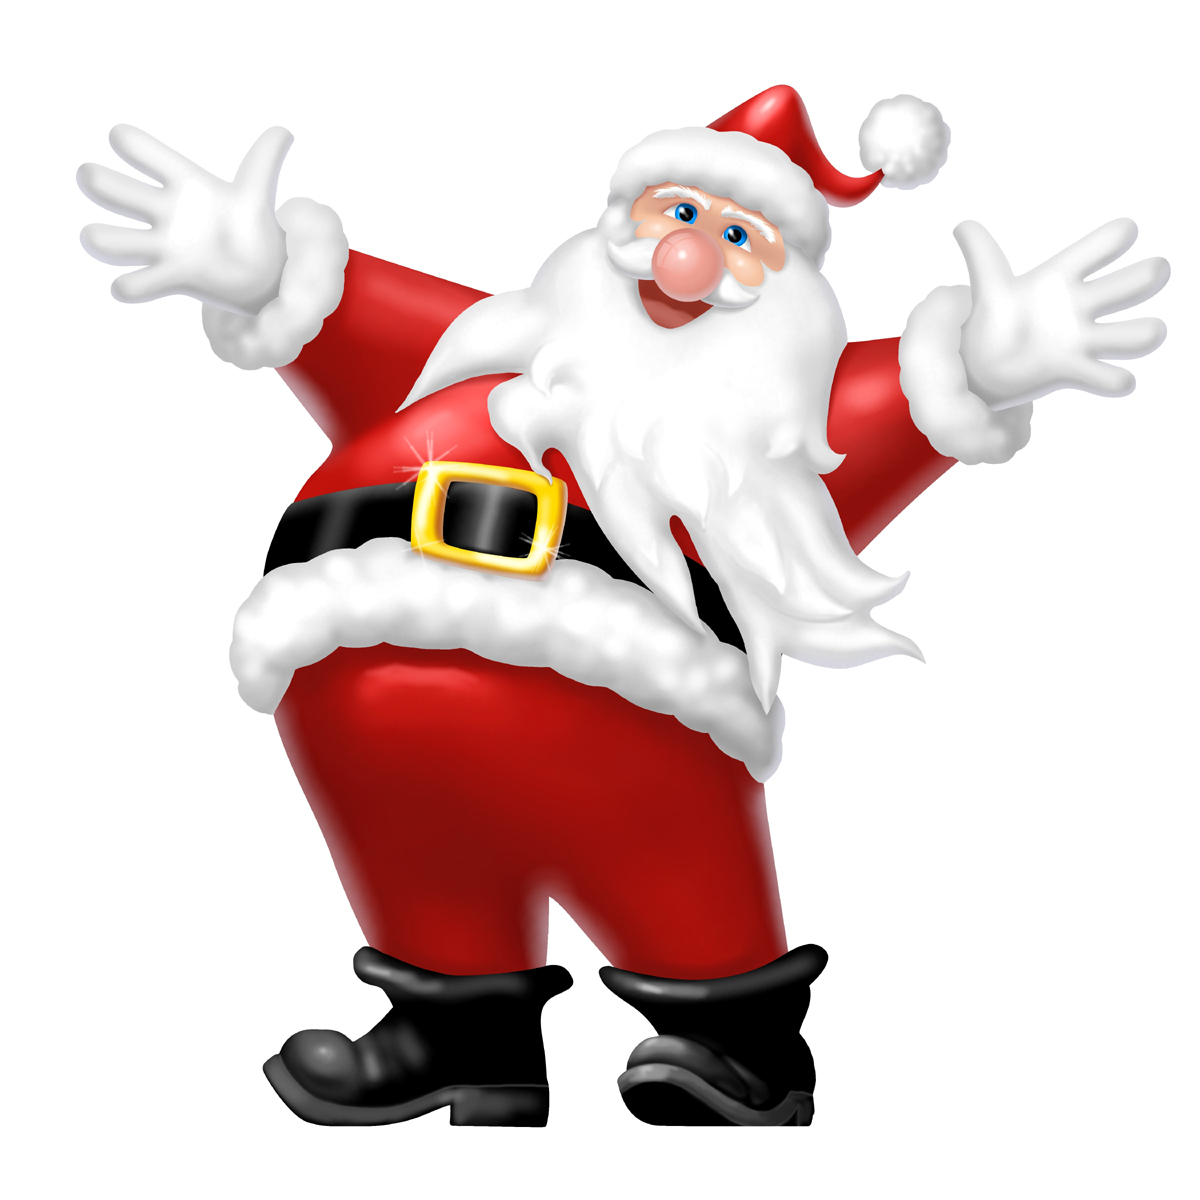 Animated Santa Claus Clipart - Cliparts.co